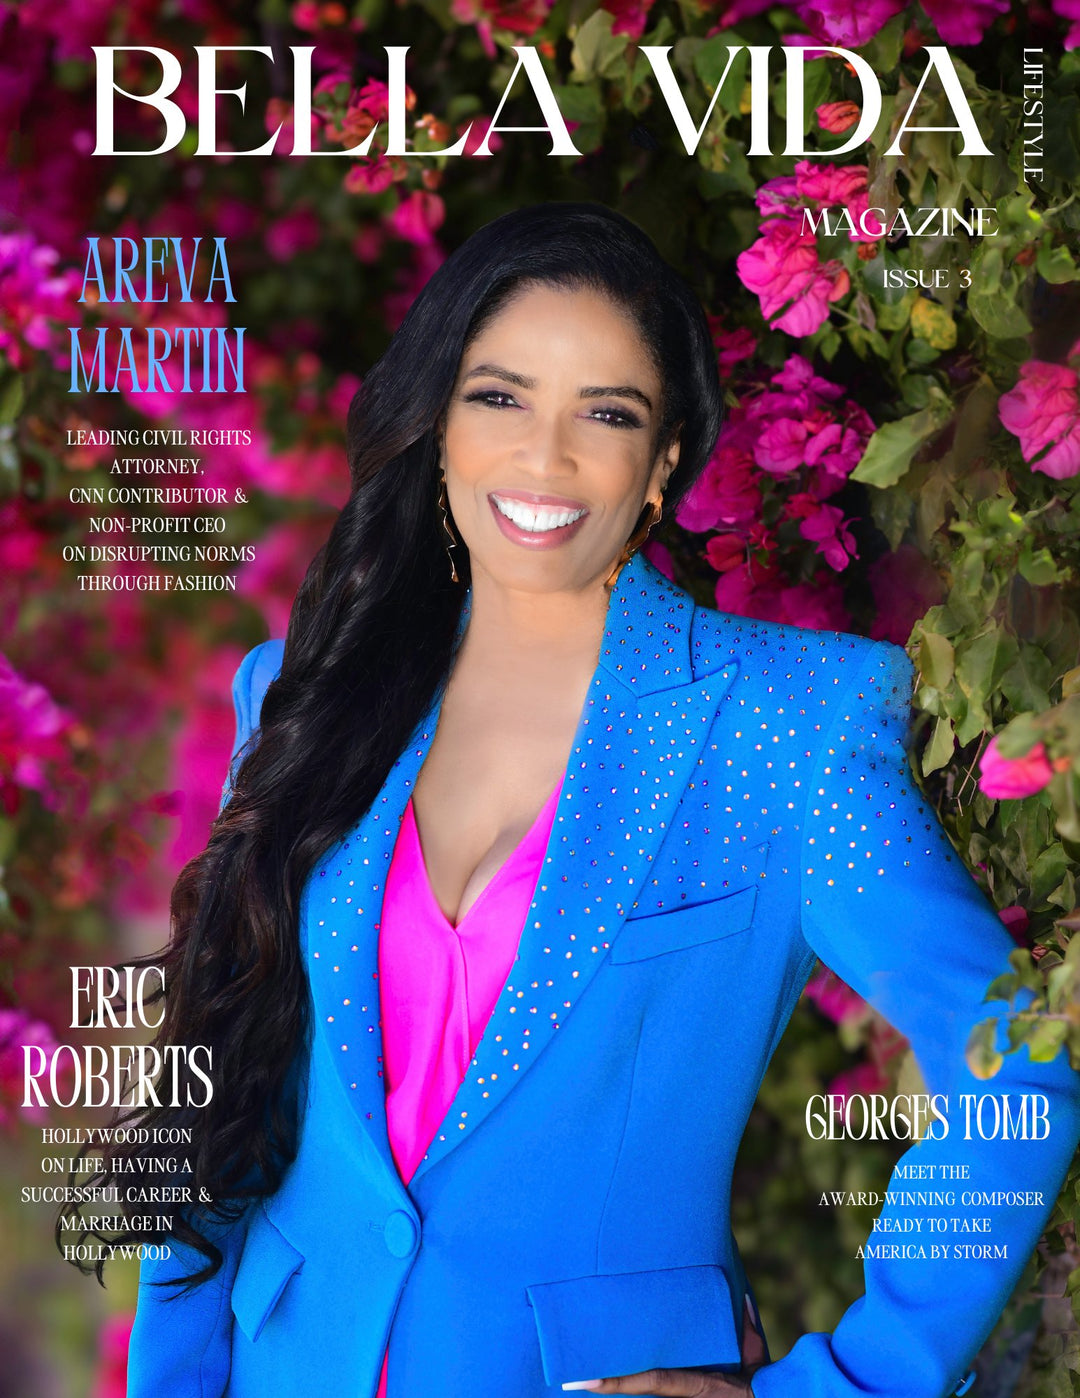 Areva Martin on cover of Bella Vida Magazine Lifestyle issue 3